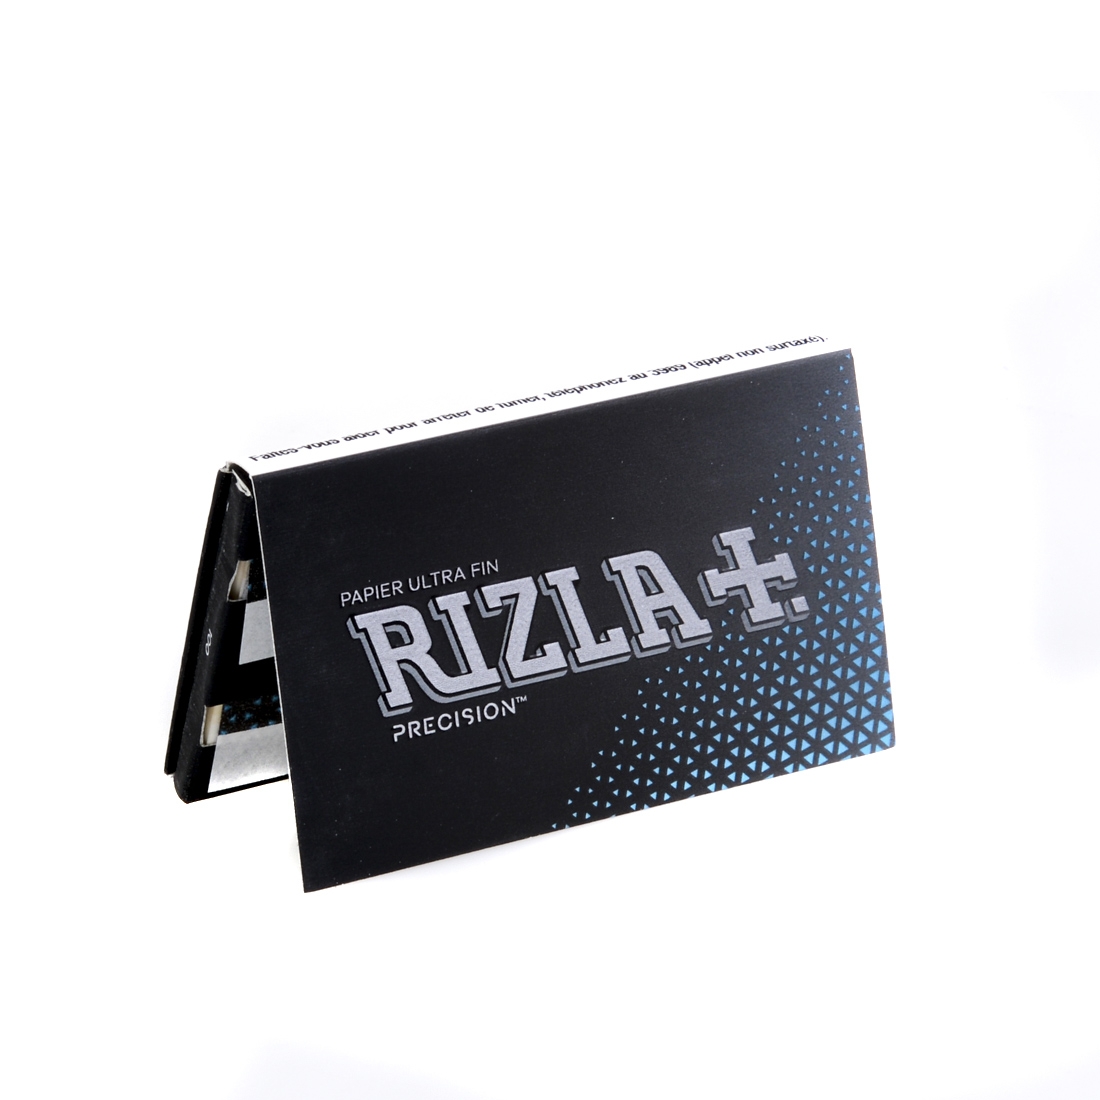 RIZLA PRECISION REGULAR X25